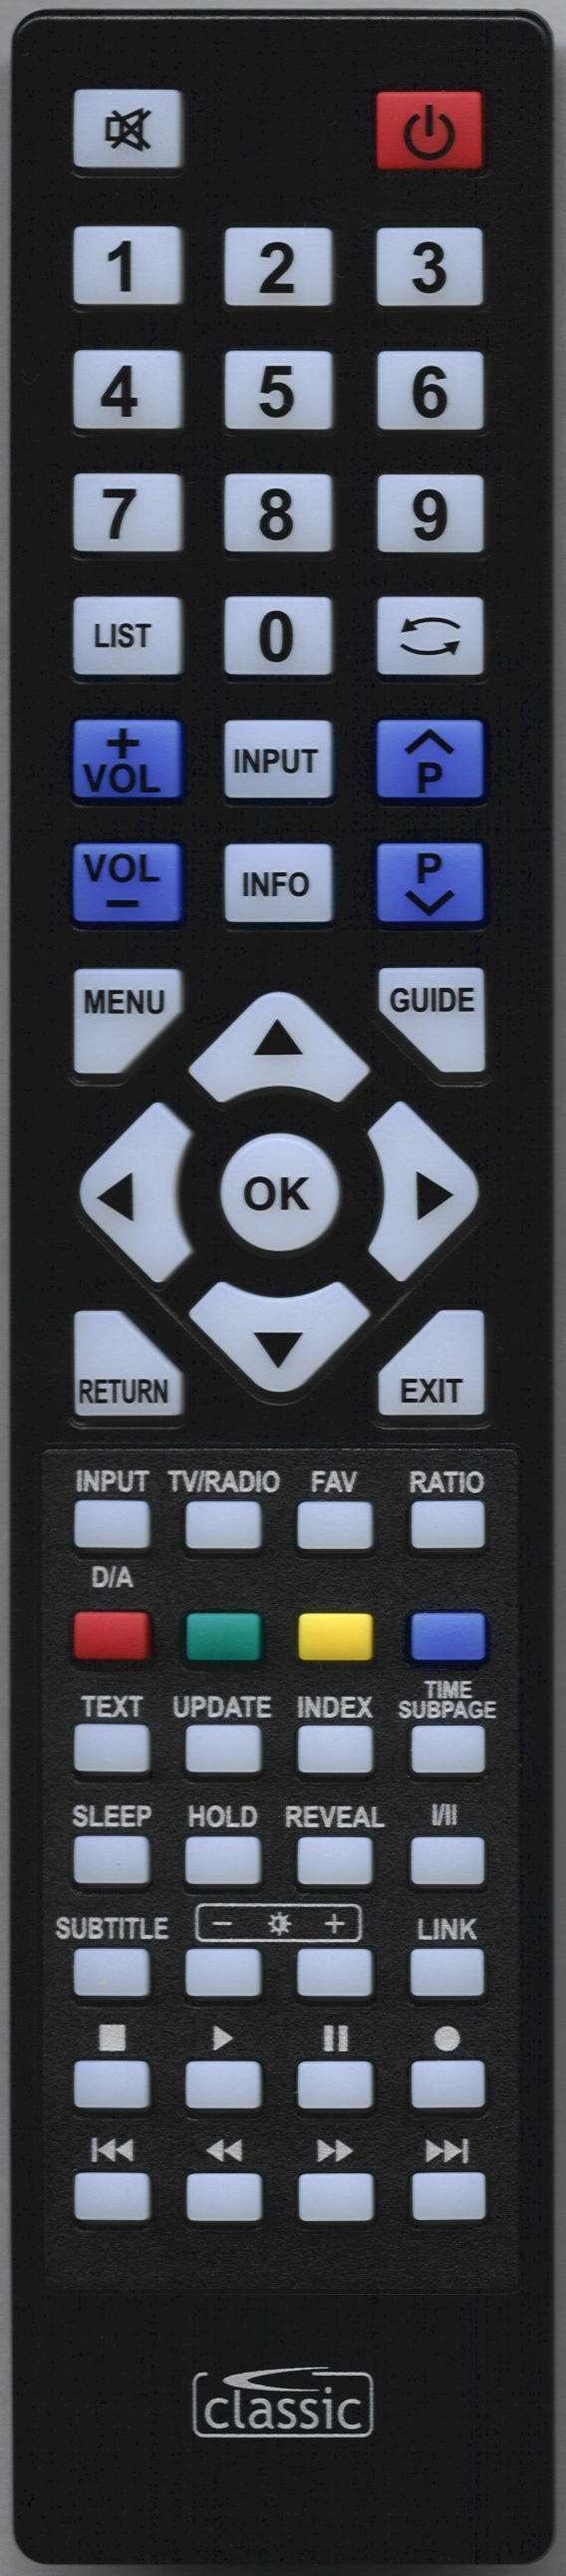 LG MKJ39170804 Remote Control